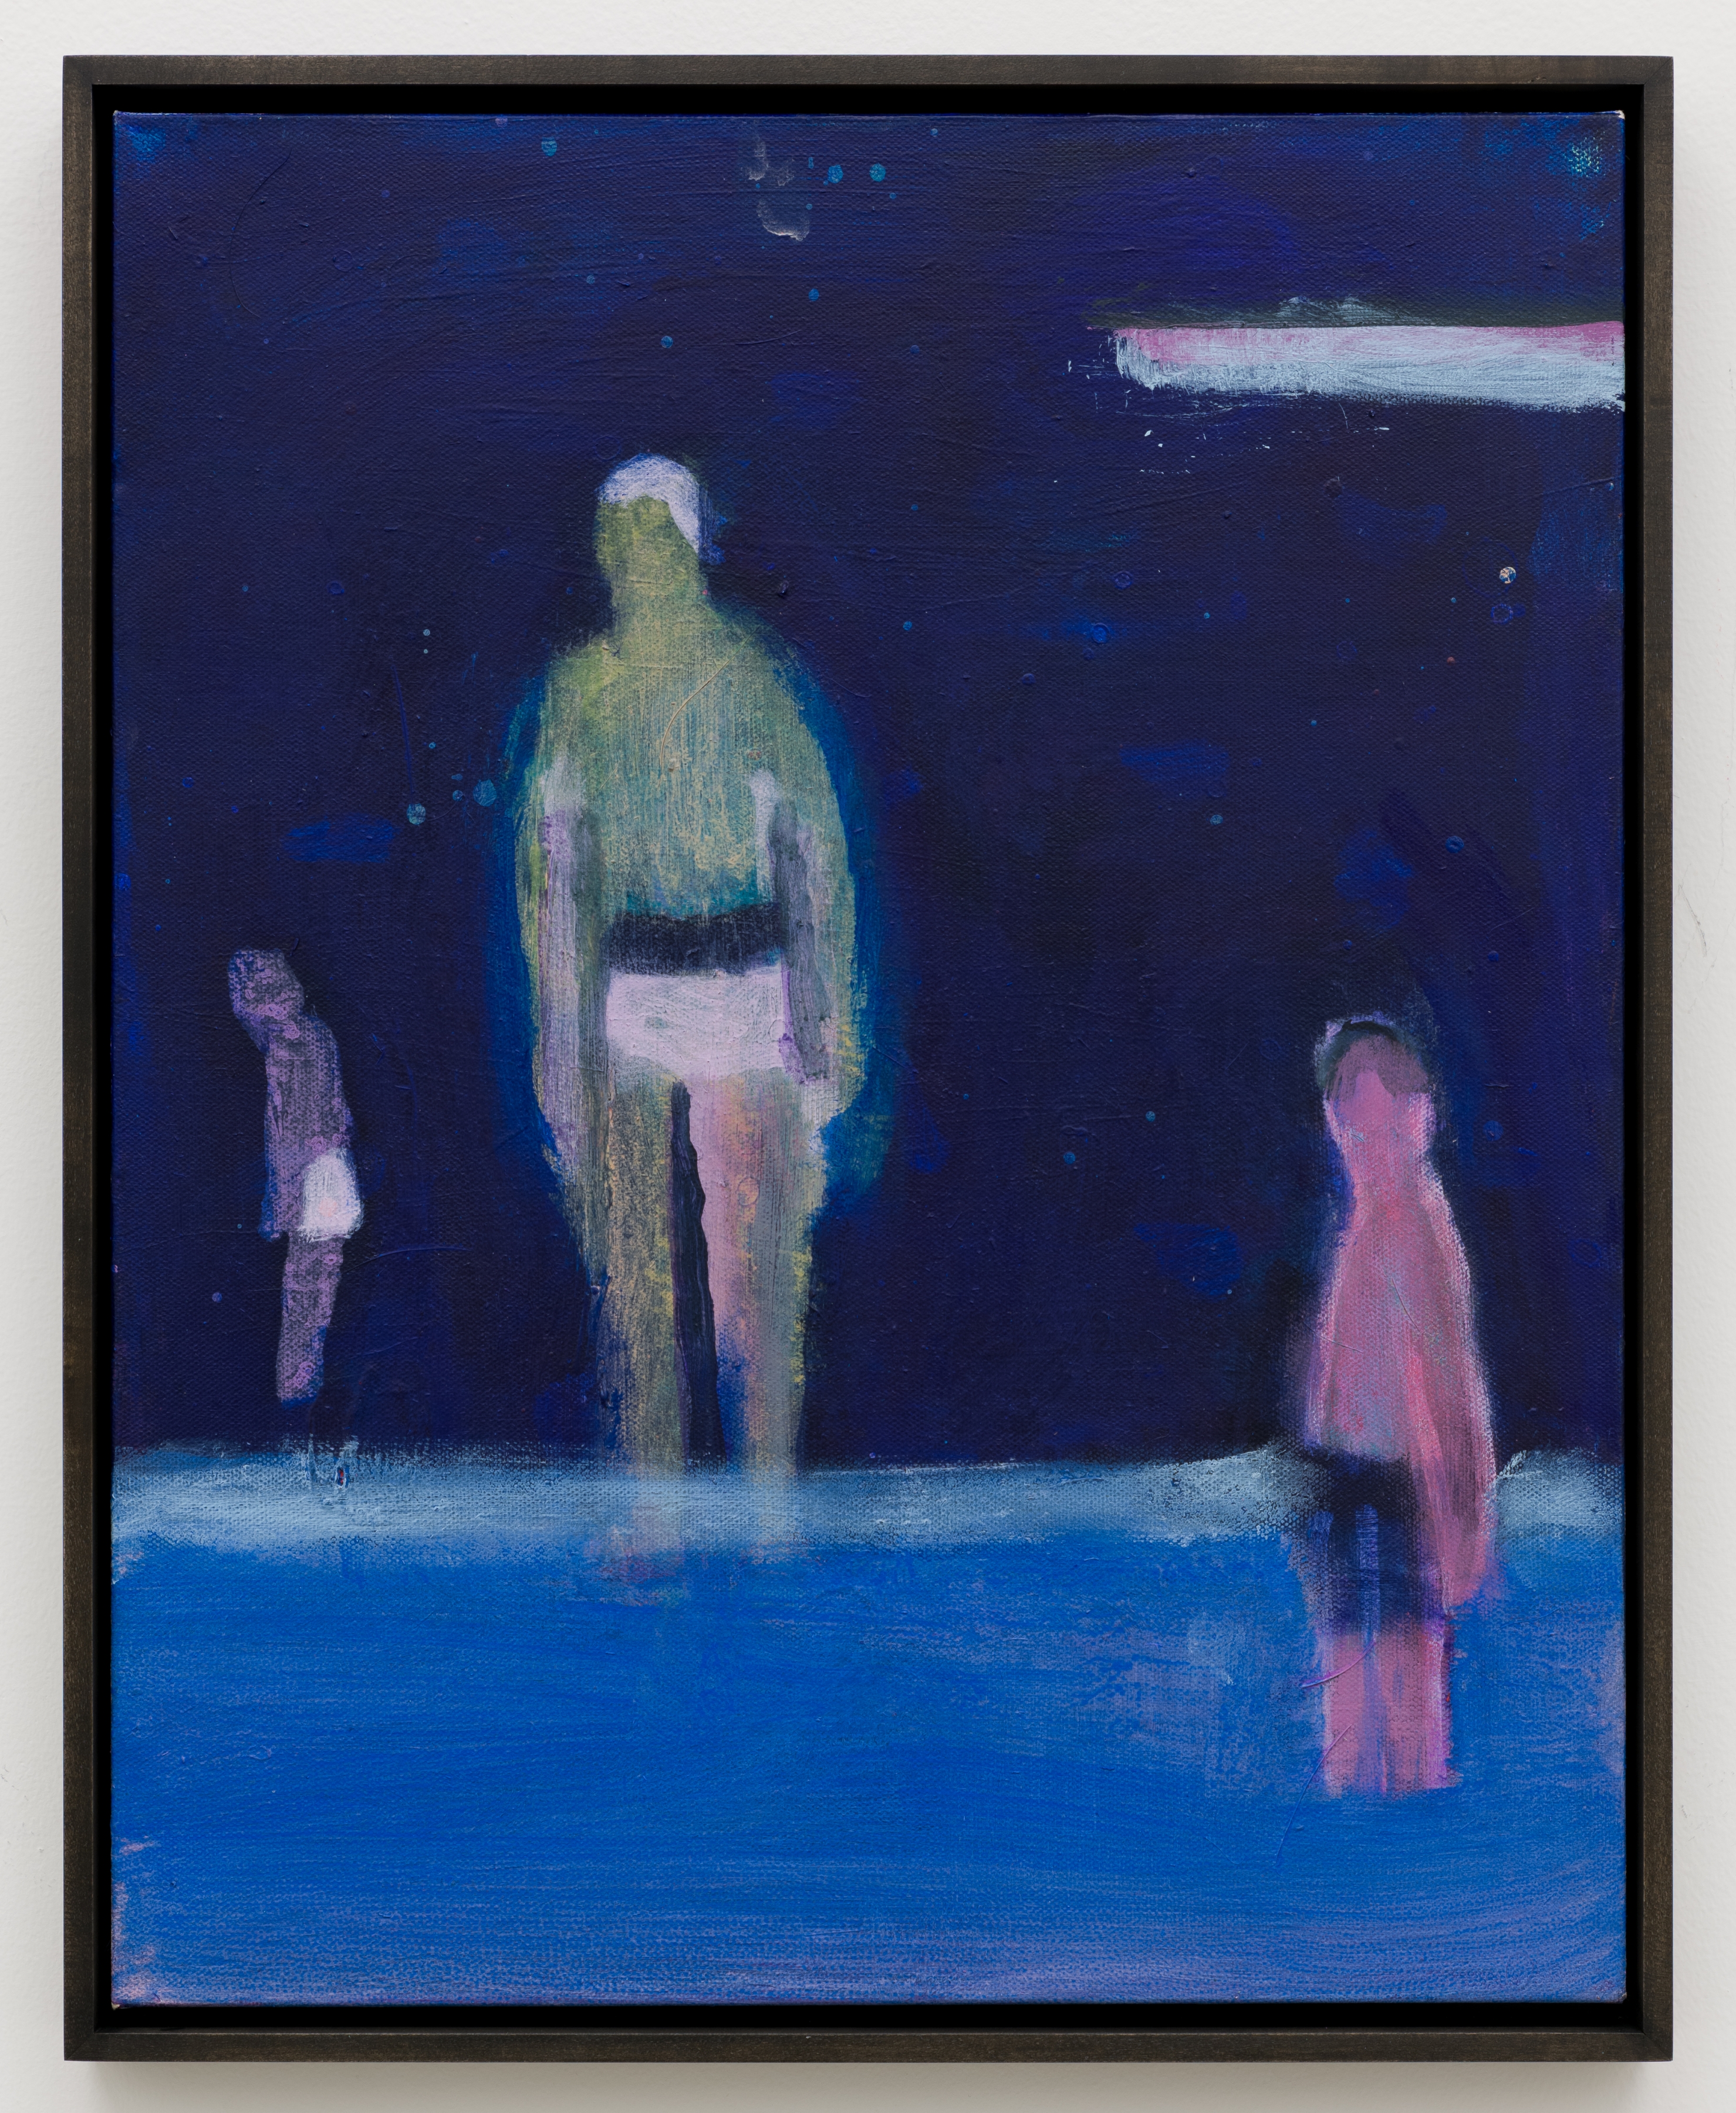 Katherine Bradford,&nbsp;Dark Swim, 2021;&nbsp;acrylic on canvas,&nbsp;20h x 16w in,&nbsp;50.80h x 40.64w cm

Inquire